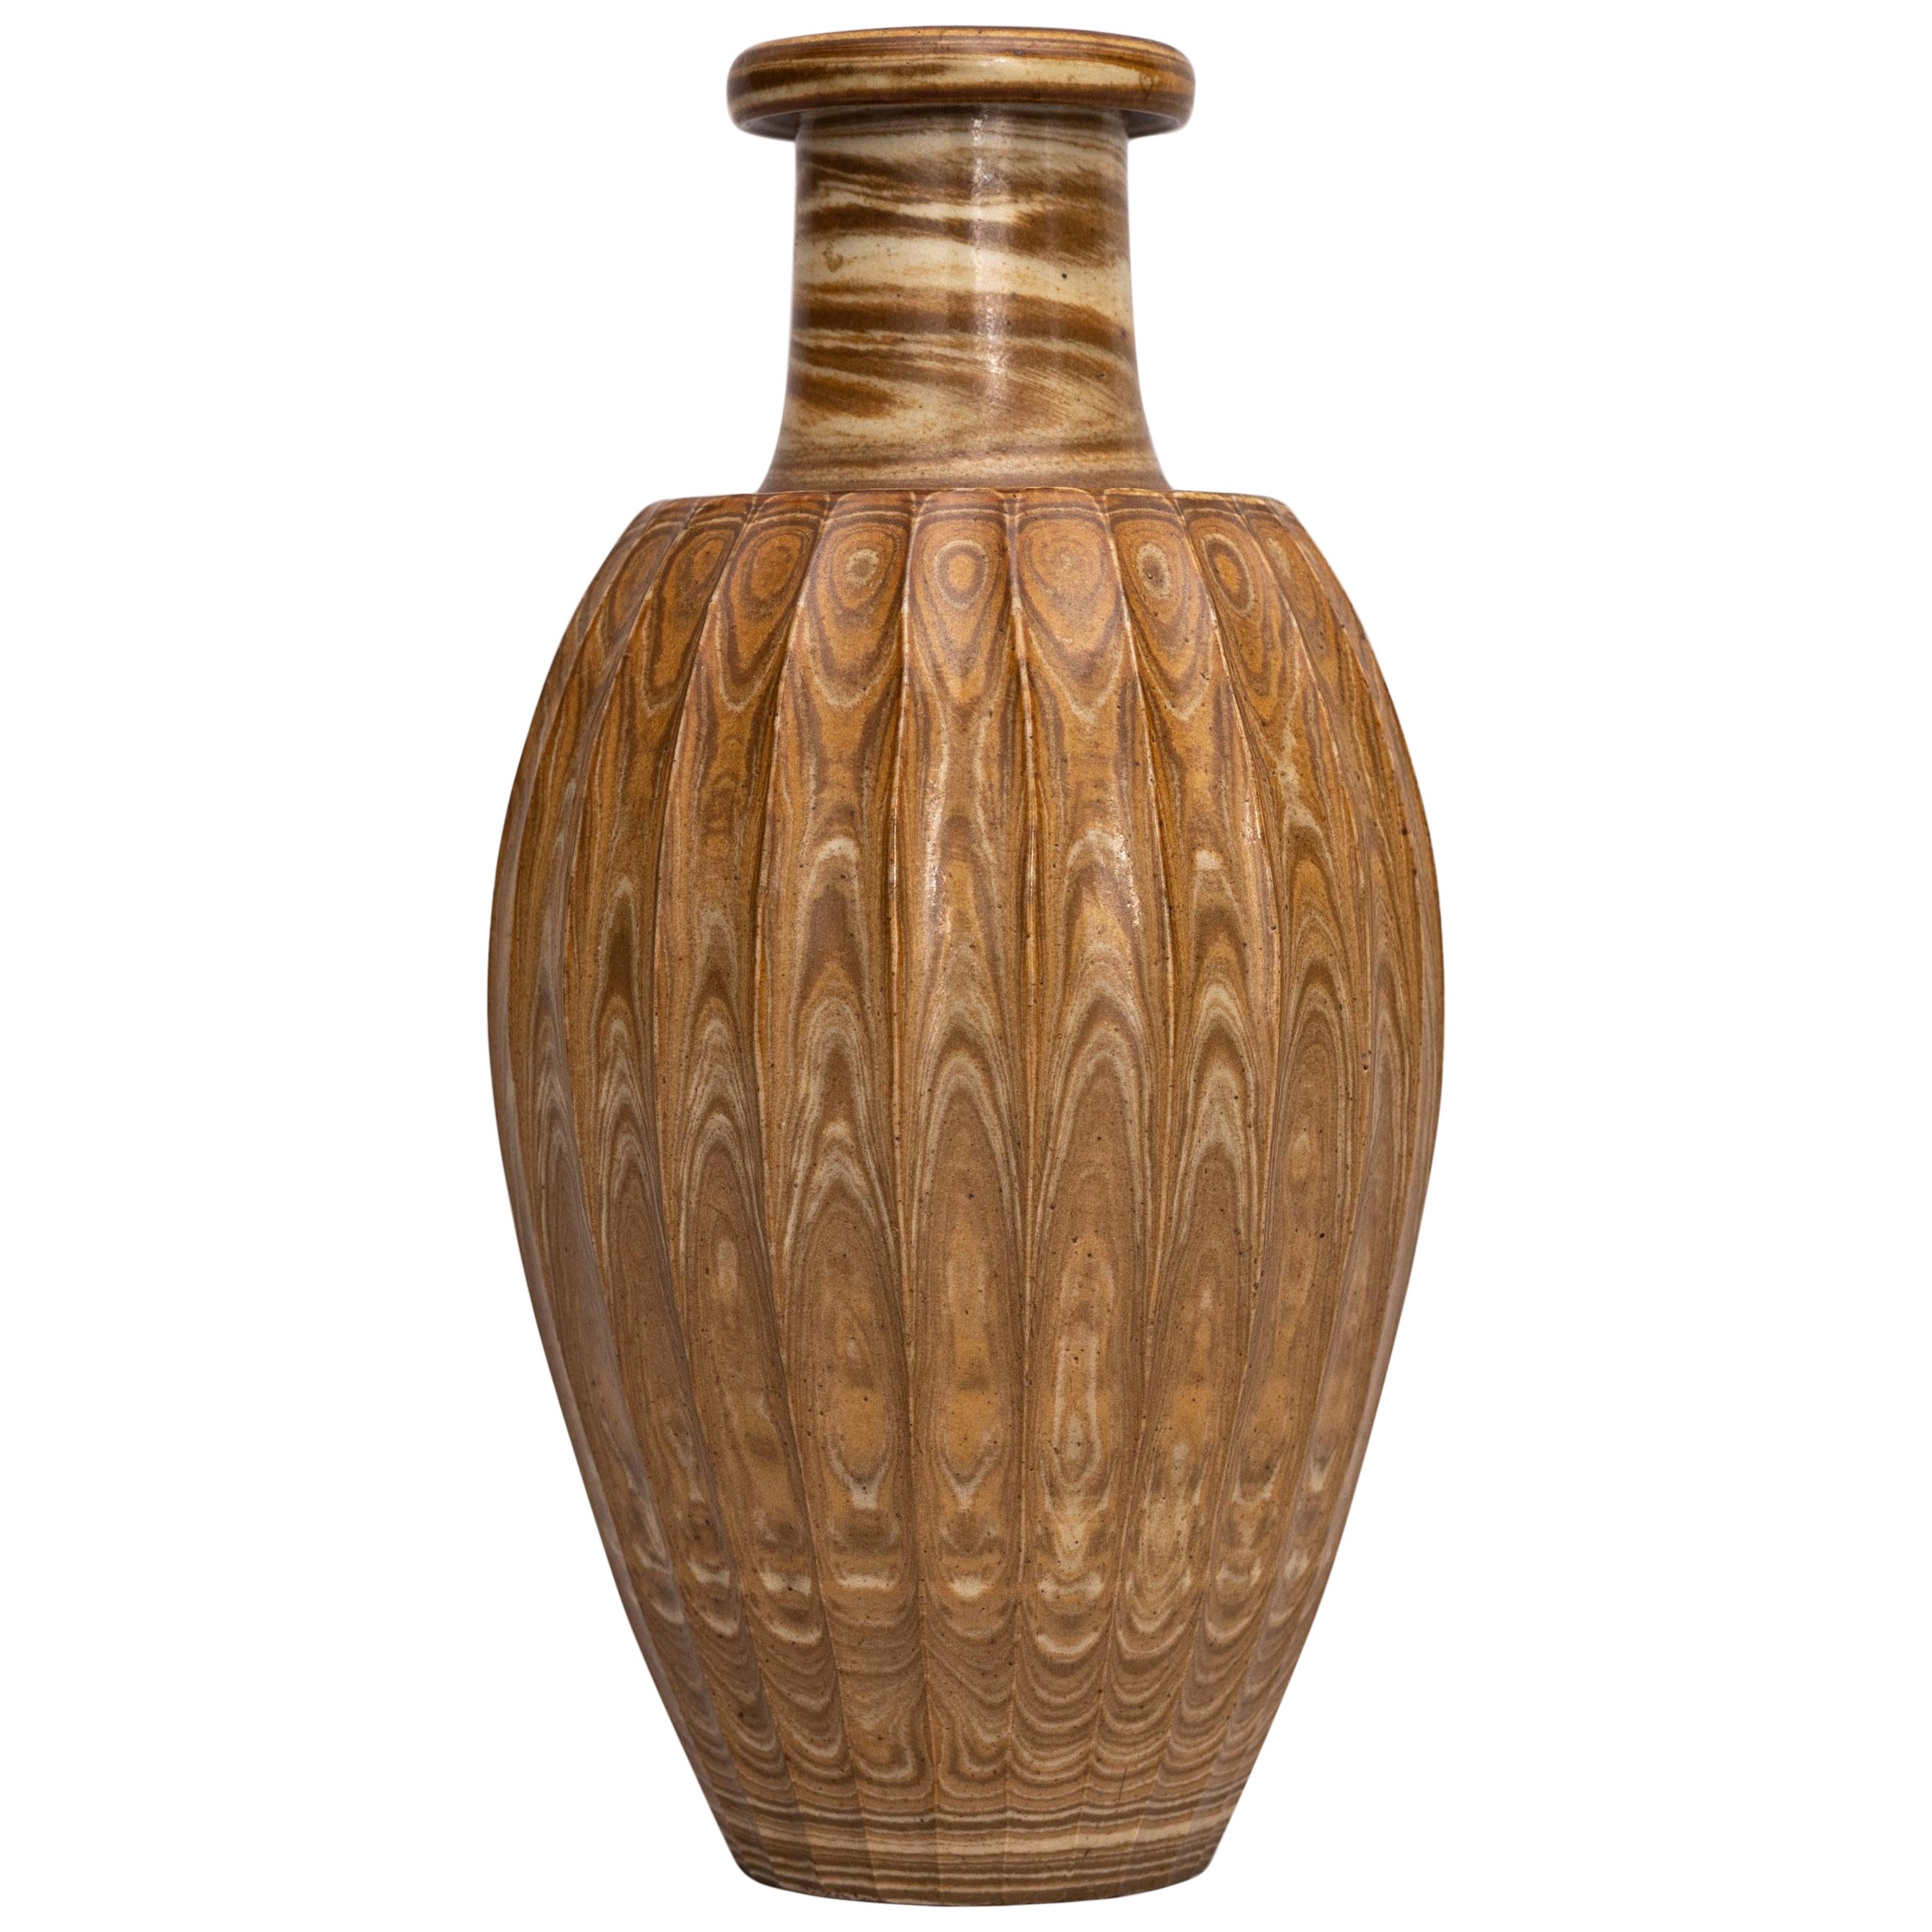 Early Doulton Lambeth Agateware Bud Vase